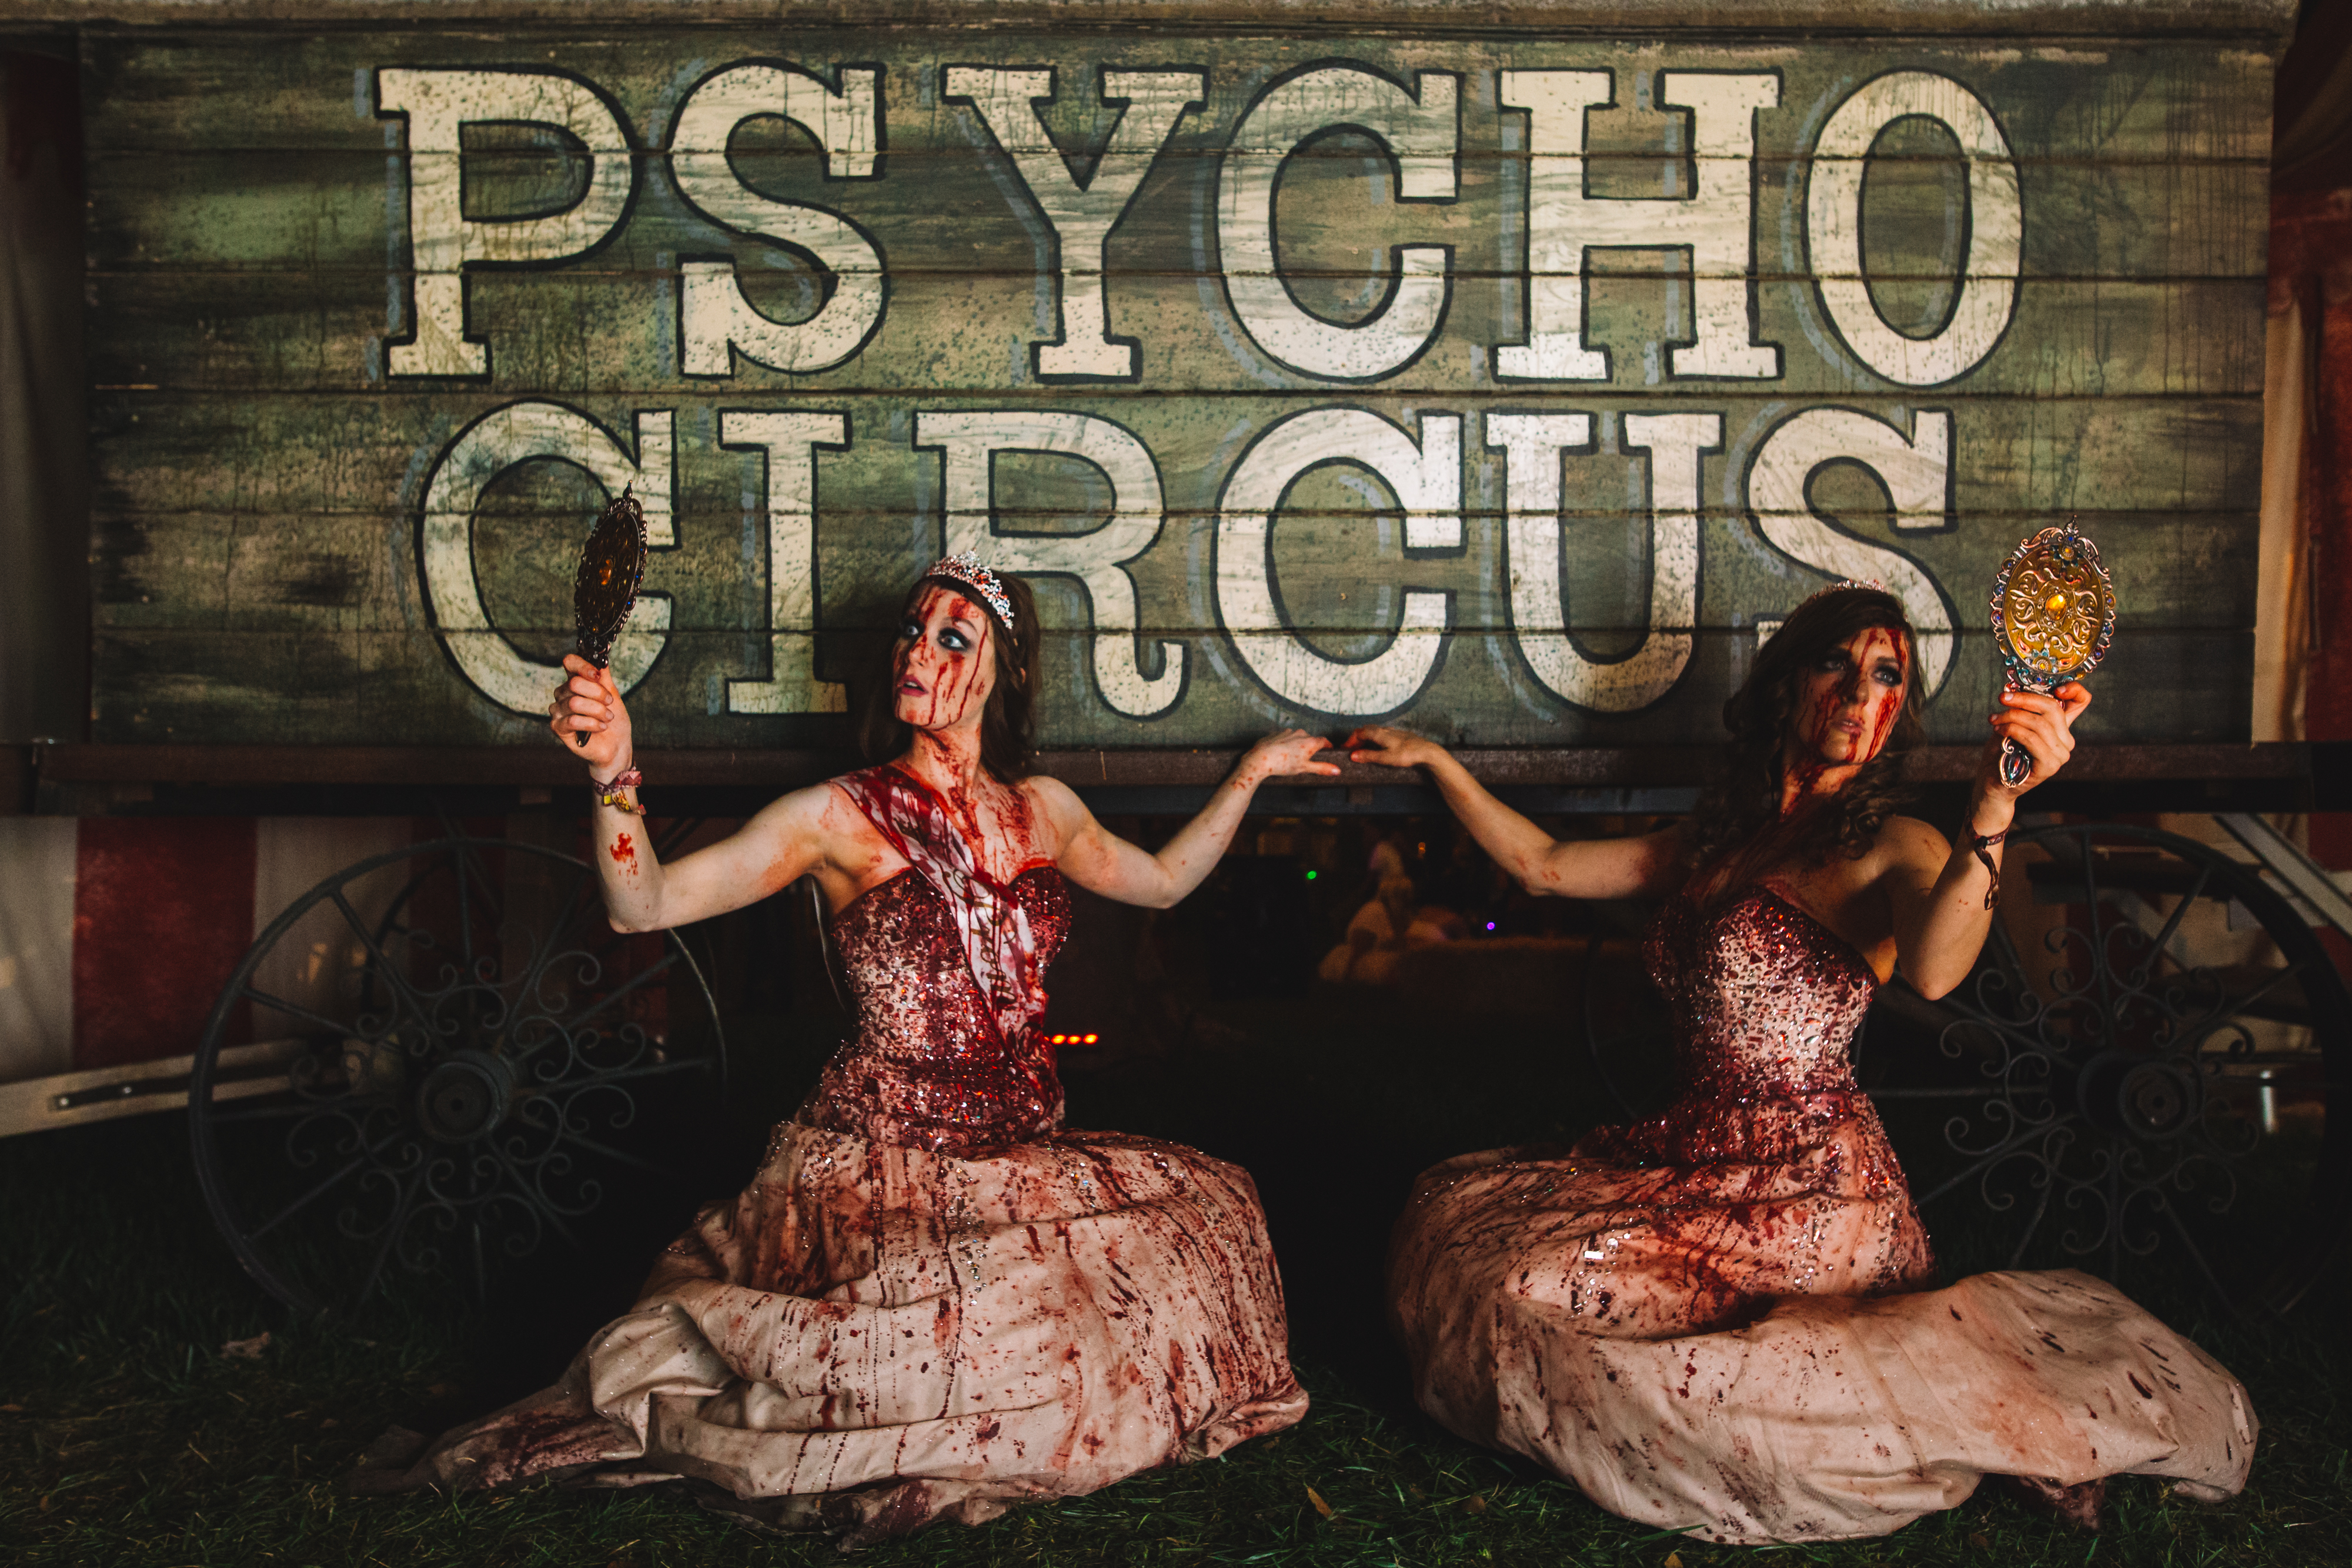 Escape: Psycho Circus